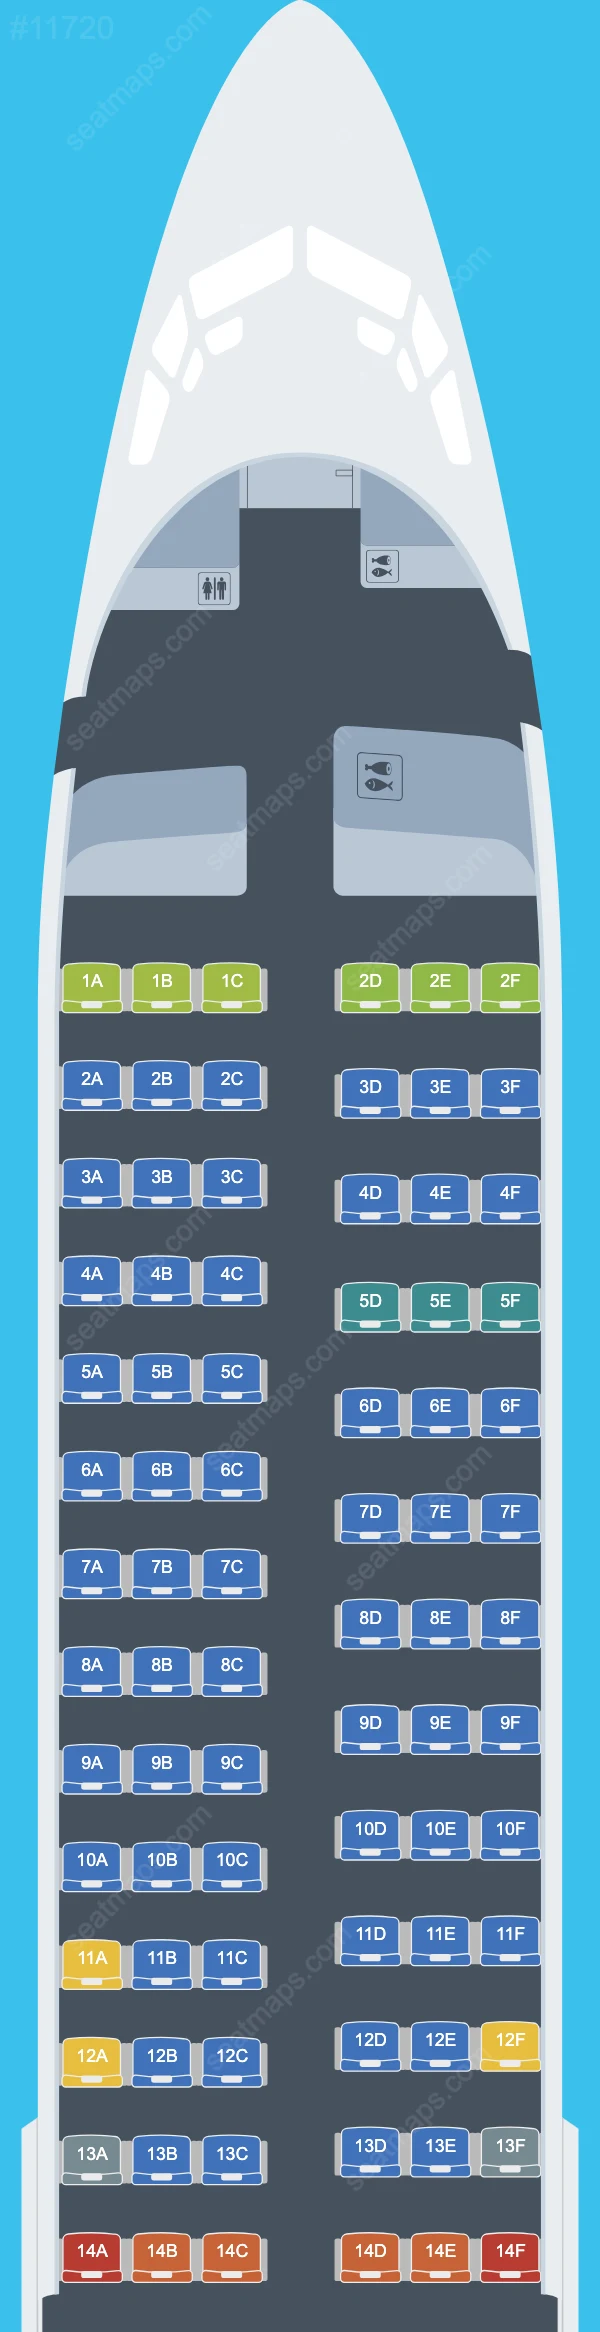 SkyUp MT мапа салону Boeing 737-800 737-800